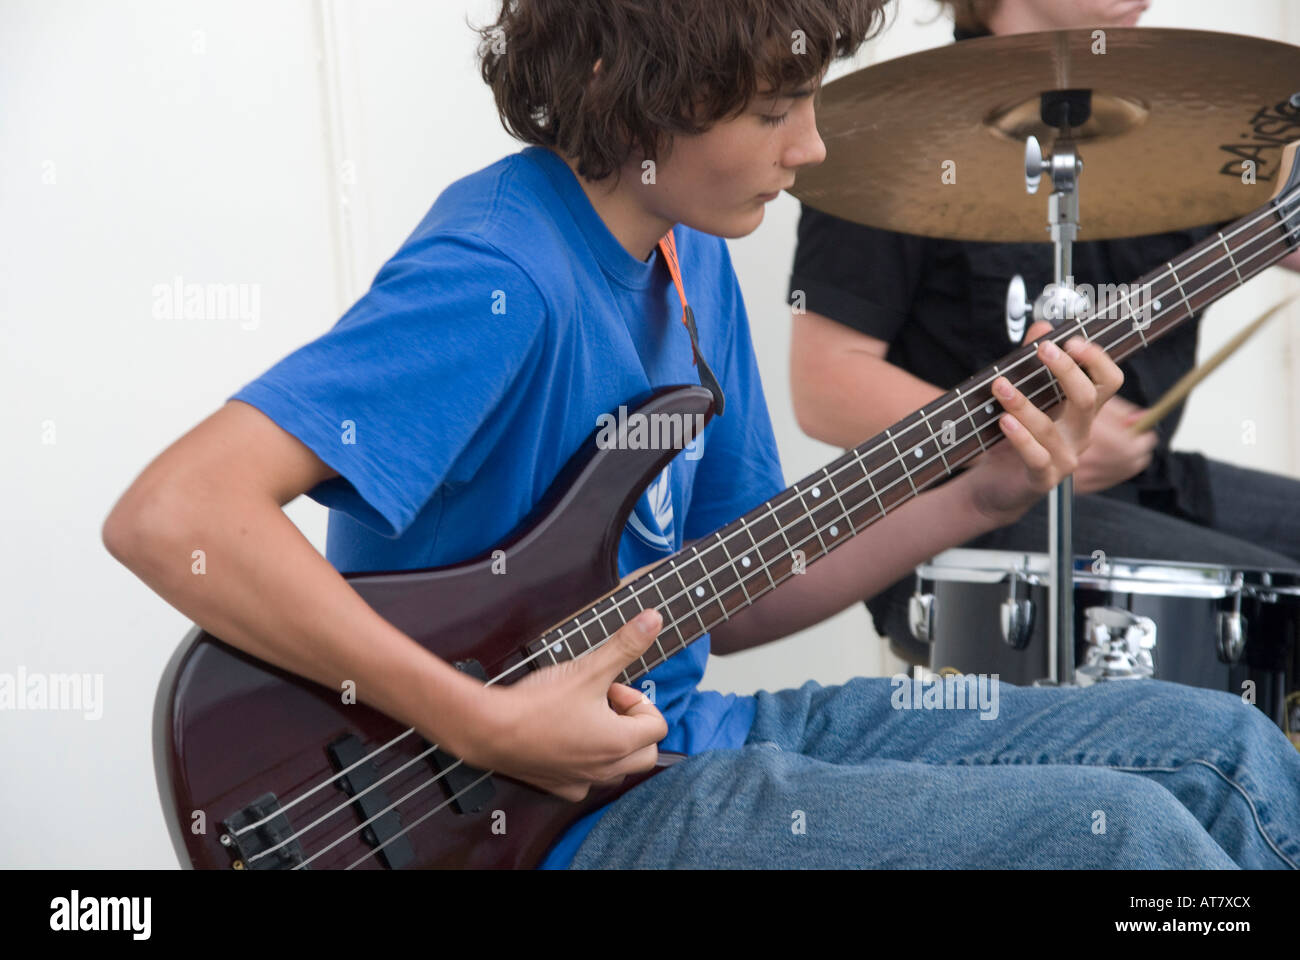 Young boy playing bass guitar Stock Photo